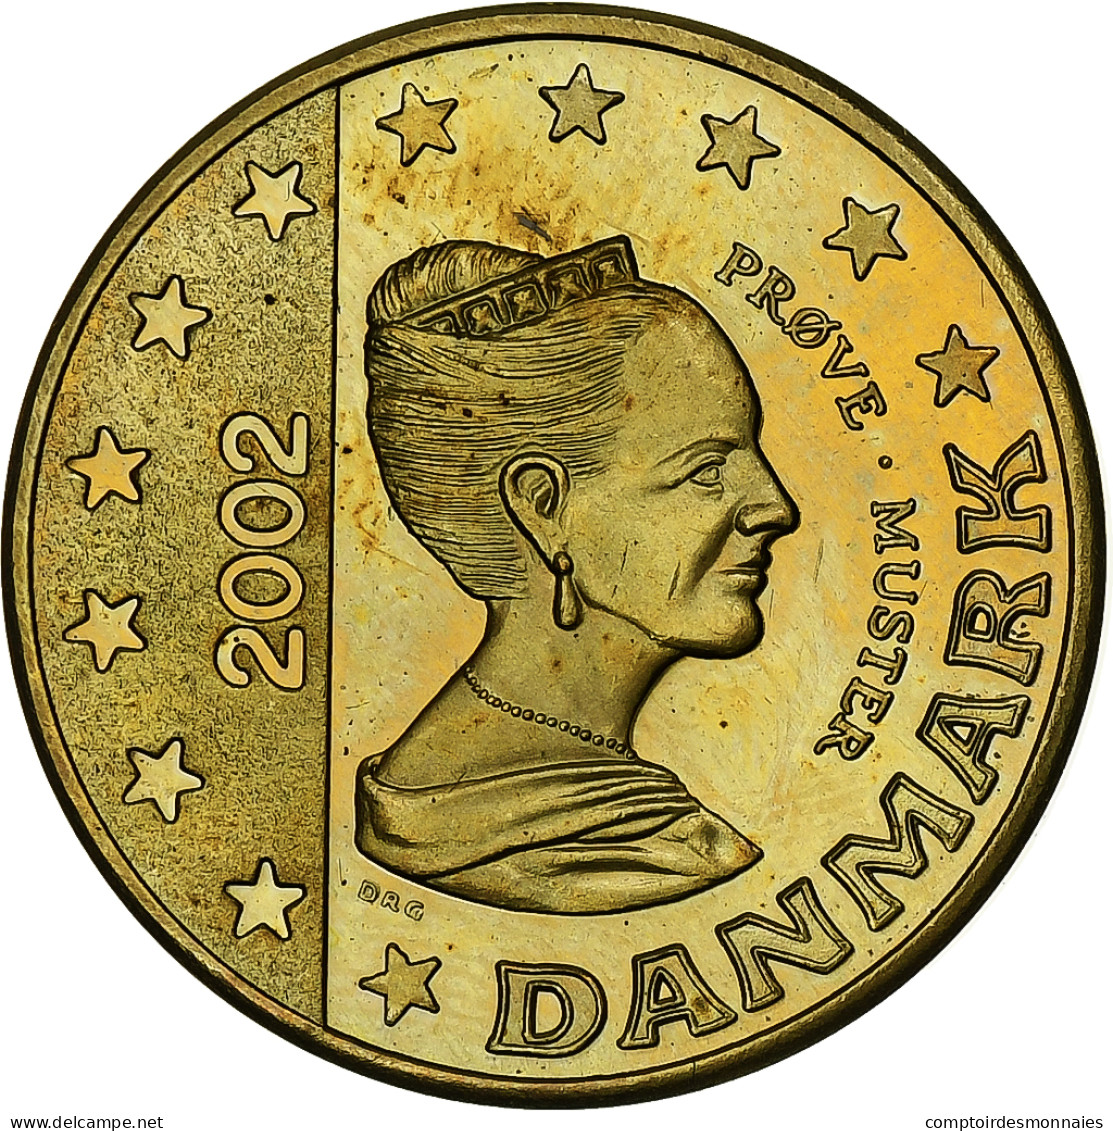 Danemark, 50 Euro Cent, Fantasy Euro Patterns, Essai-Trial, BE, 2002, Laiton - Privatentwürfe